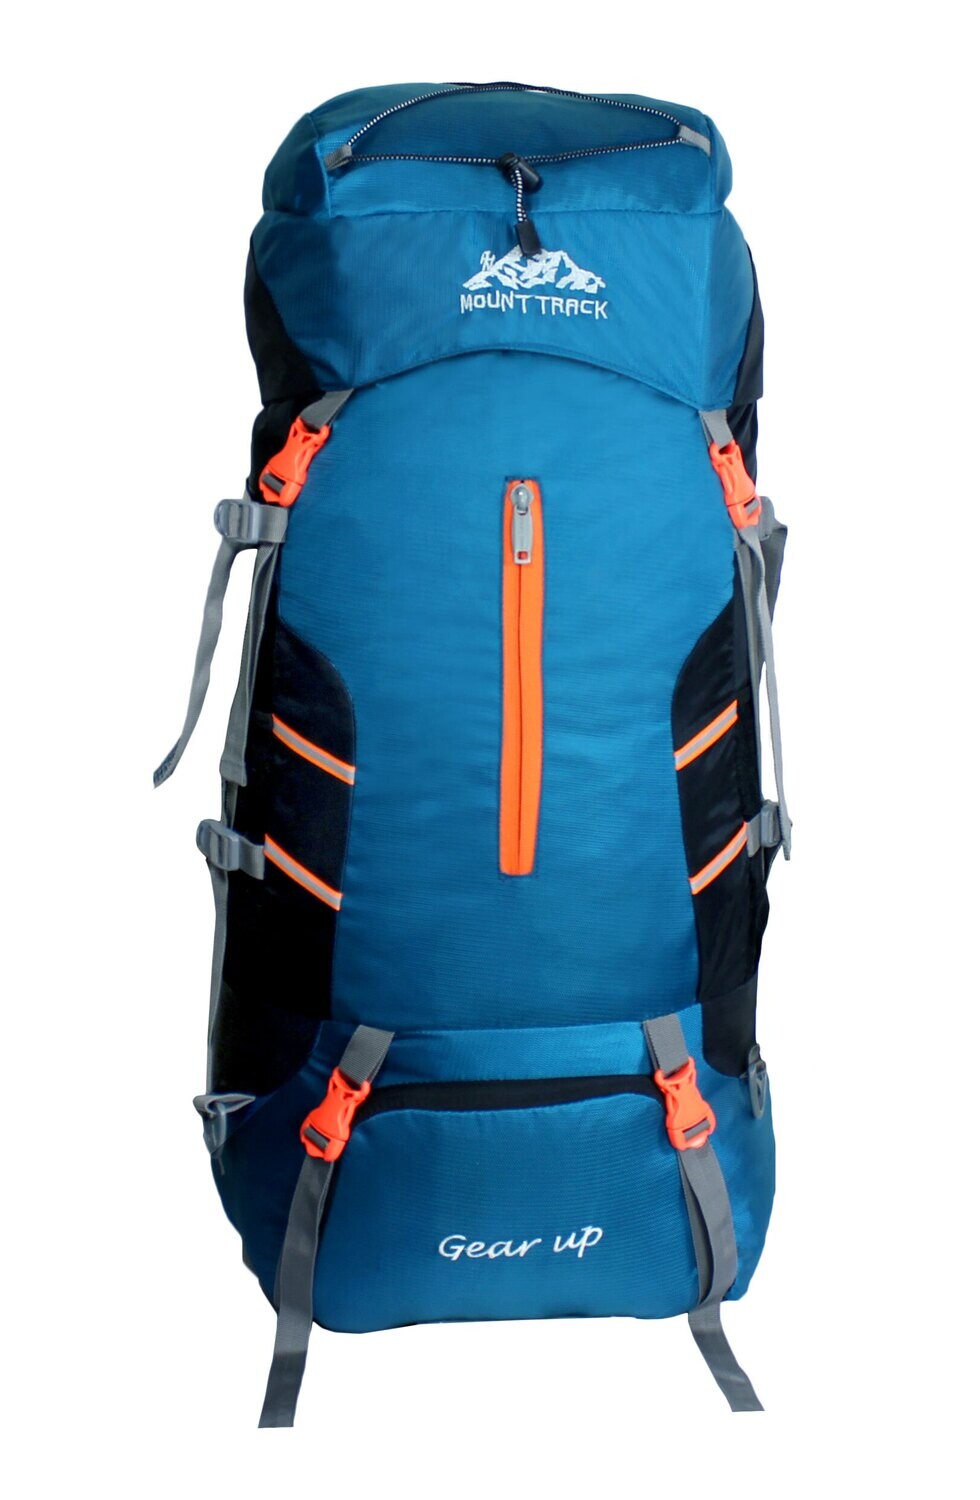 Mount Track rucksack, hiking & trekking backpack 70 ltrs